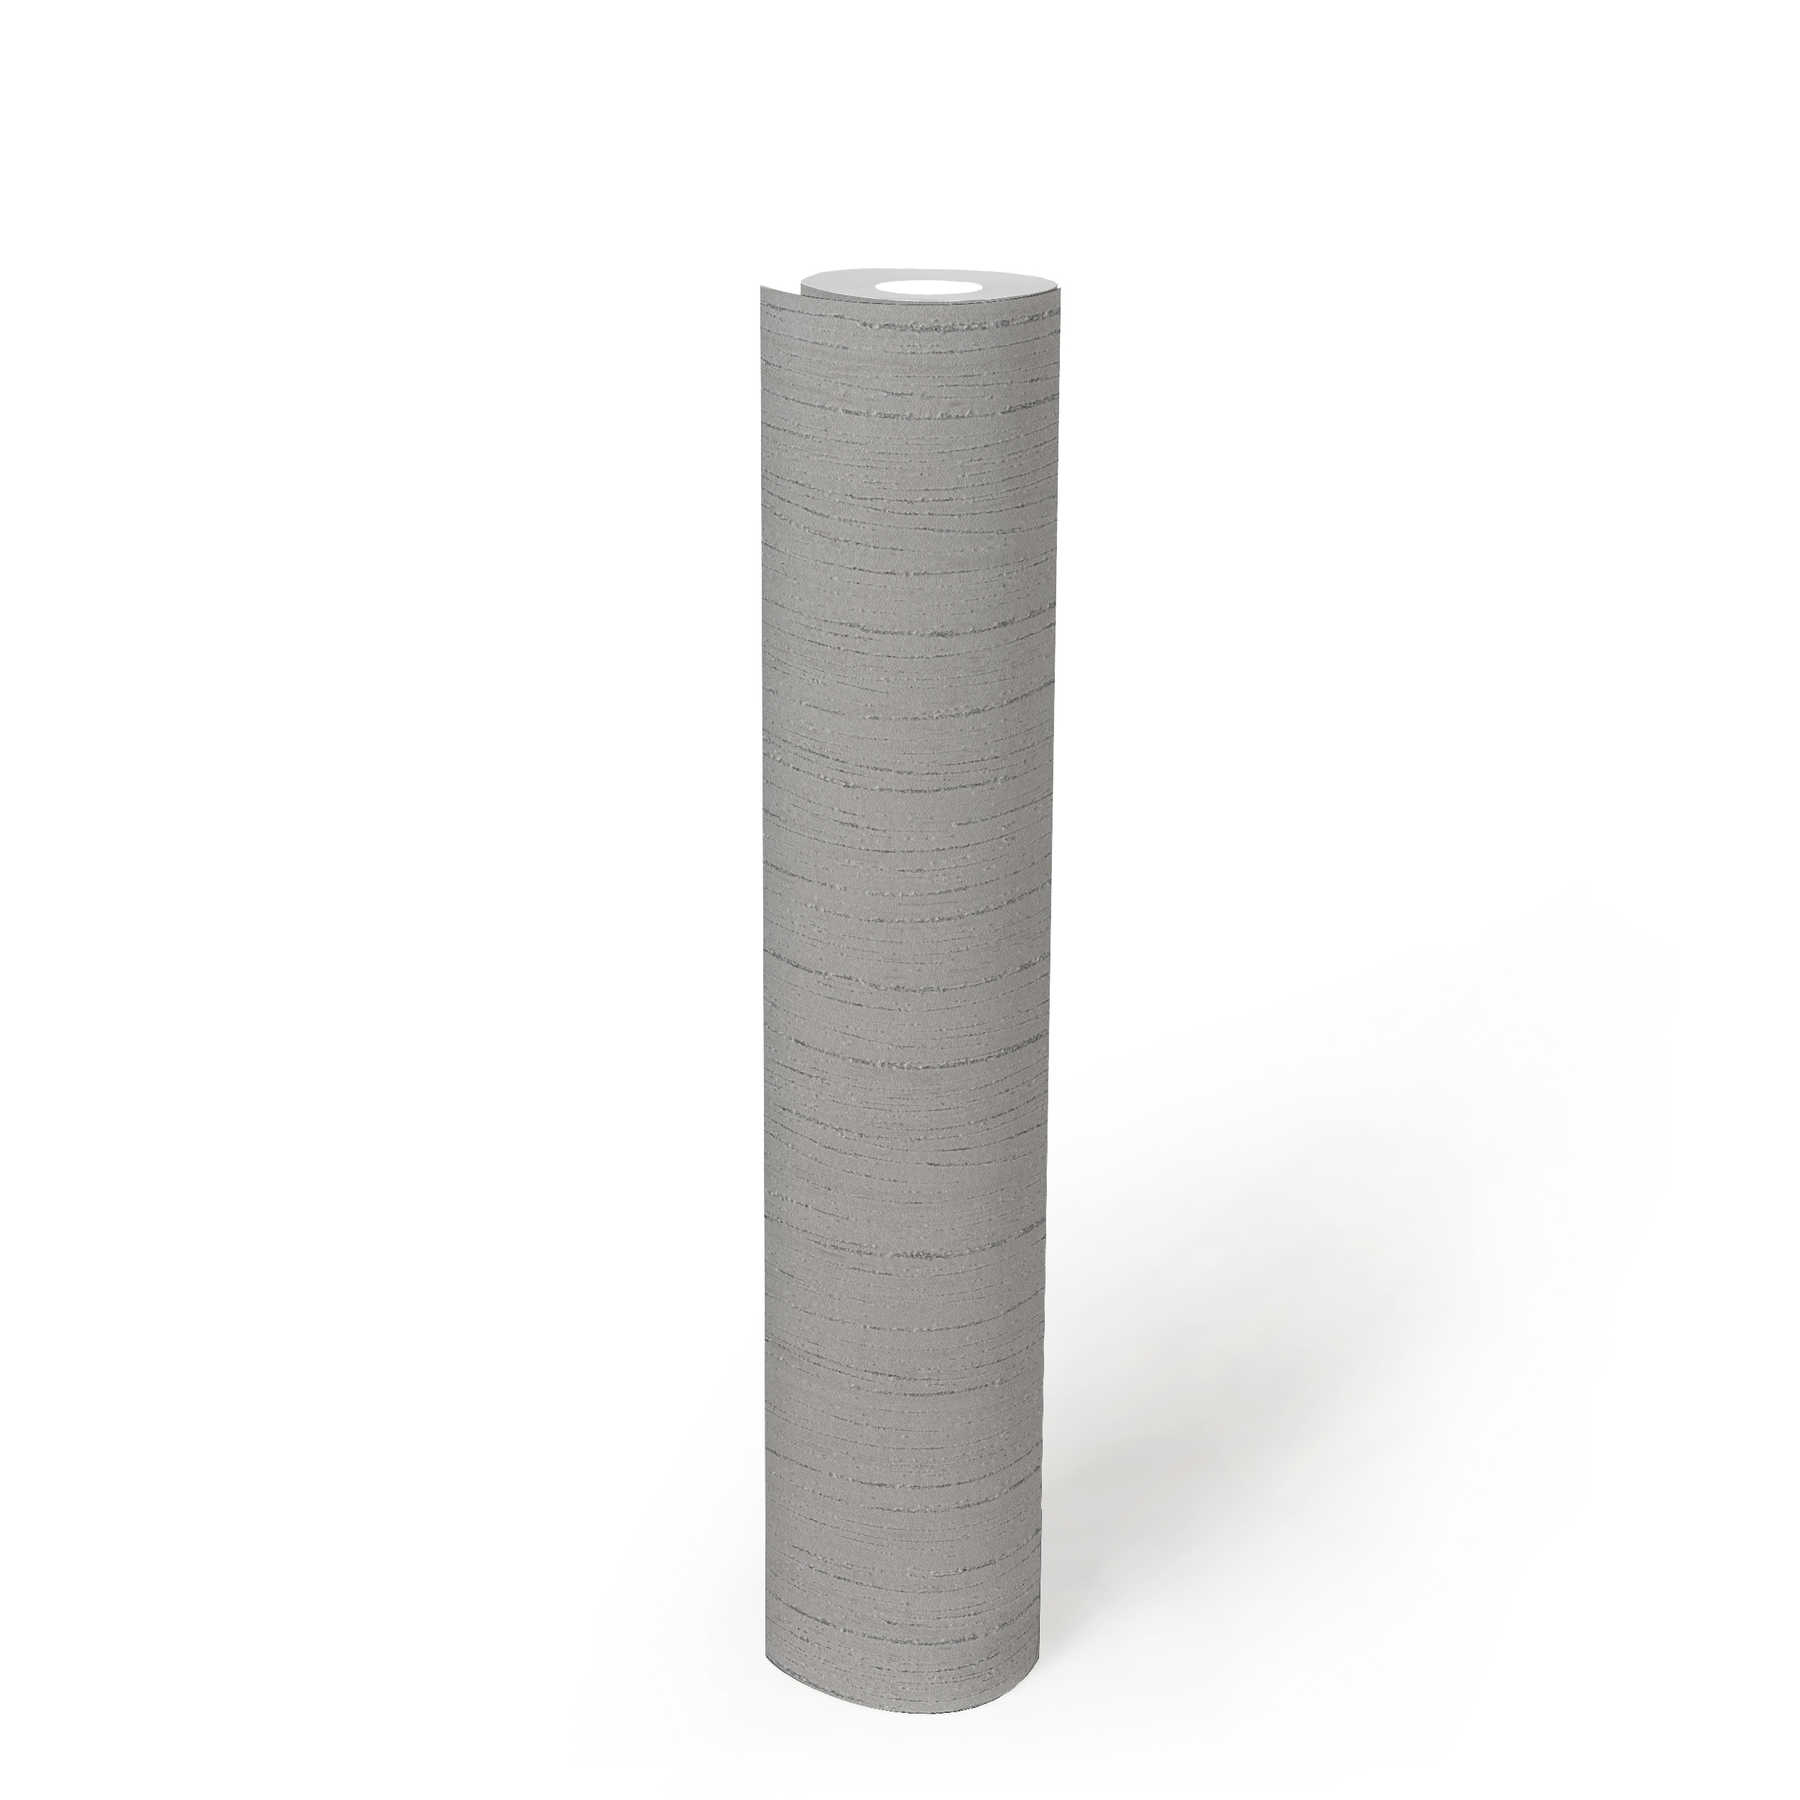             Tapete Taubengrau mit Textur & Farbeffekt – Grau
        